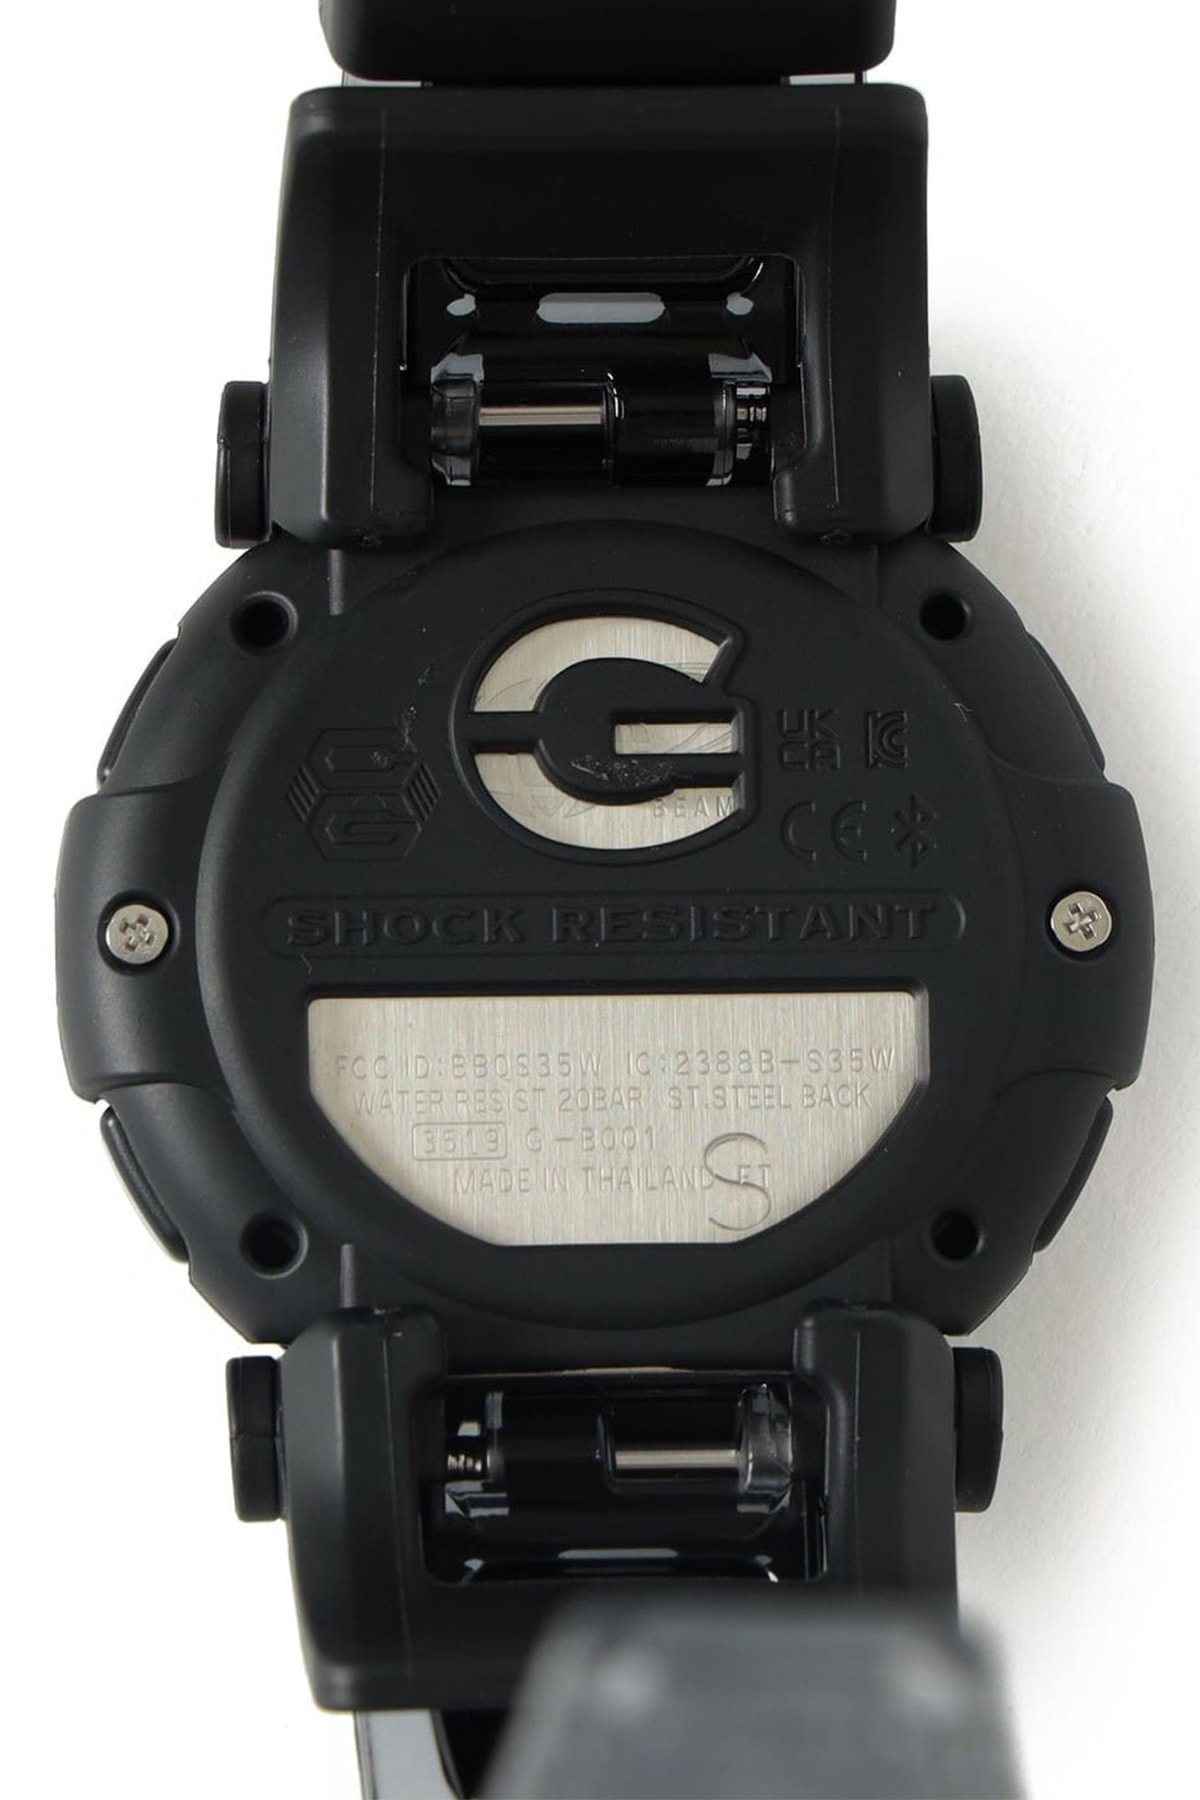 BEAMS x G-Shock 全新聯名系列錶款正式發佈